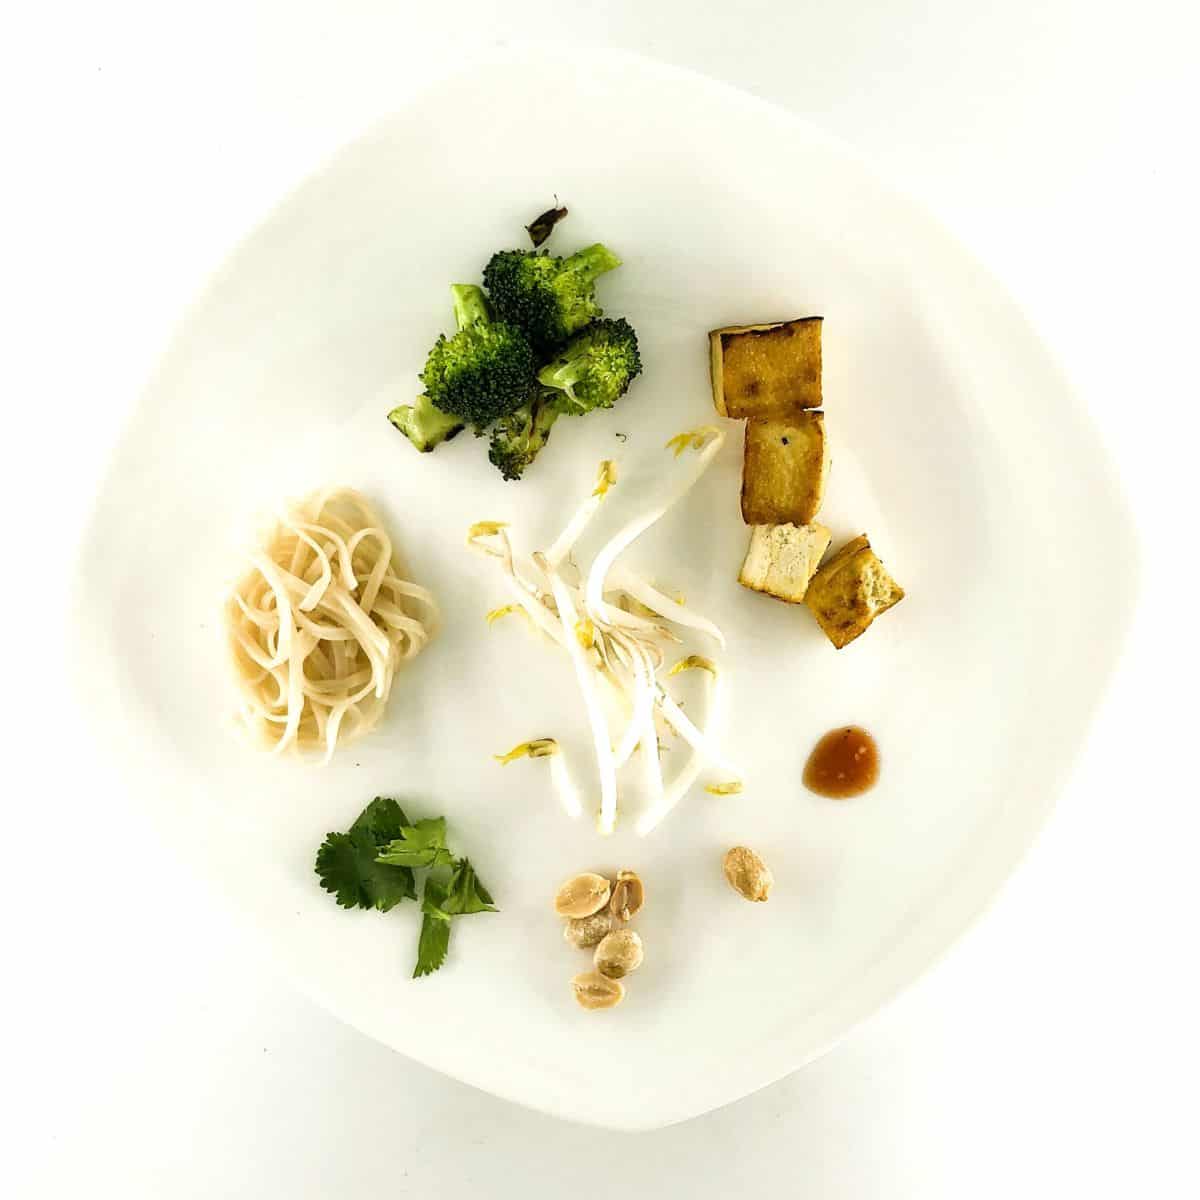 Basic ingredients to make tofu pad thai on a plate.